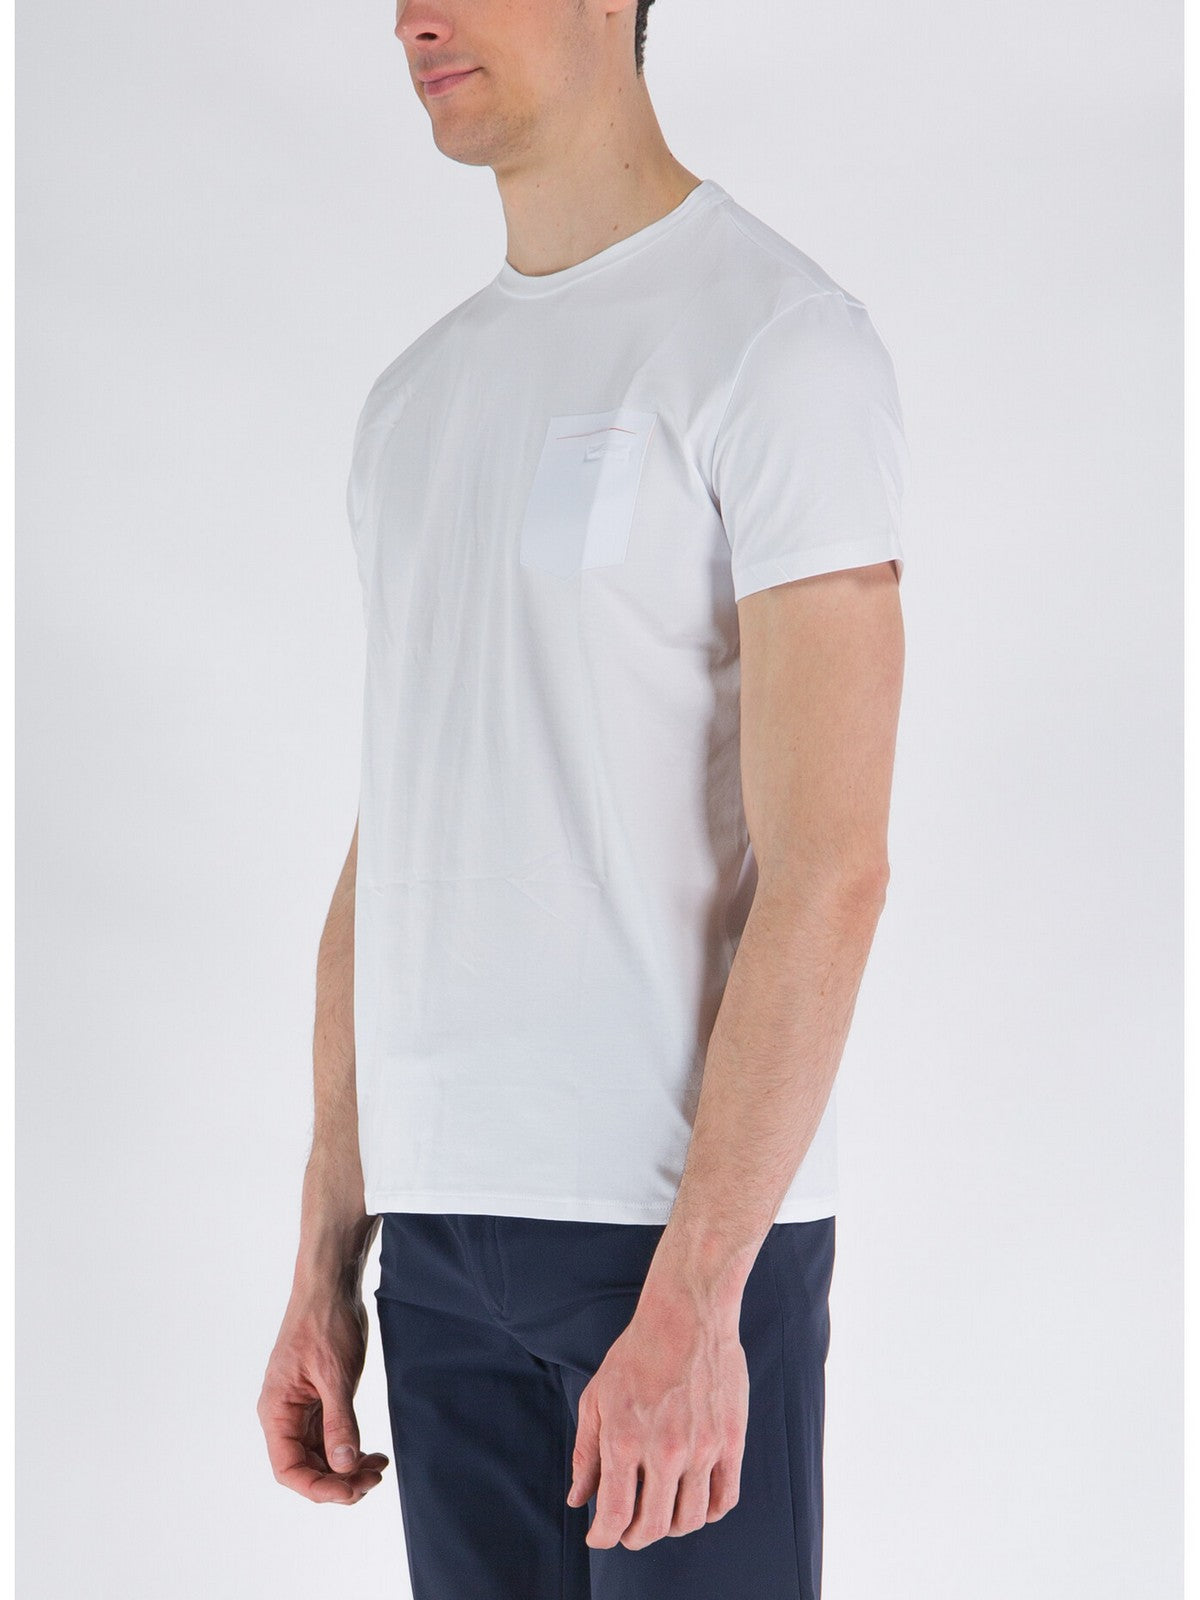 RRD T-Shirt e Polo Uomo  SES136 09 Bianco